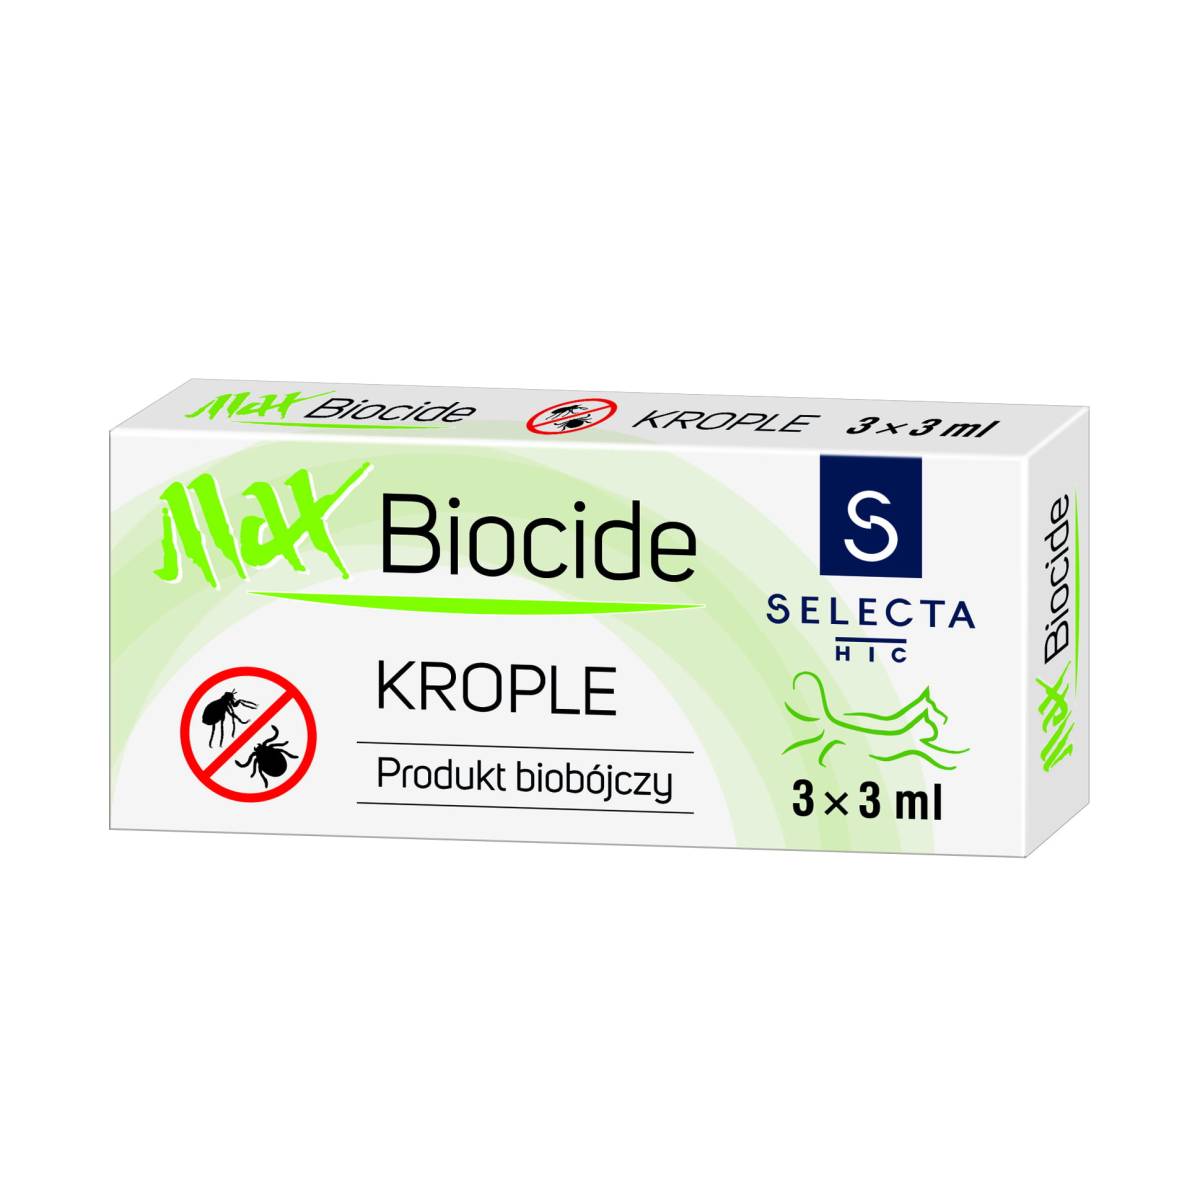 Selecta krople maxbiocide  20-60 kg 3x3ml